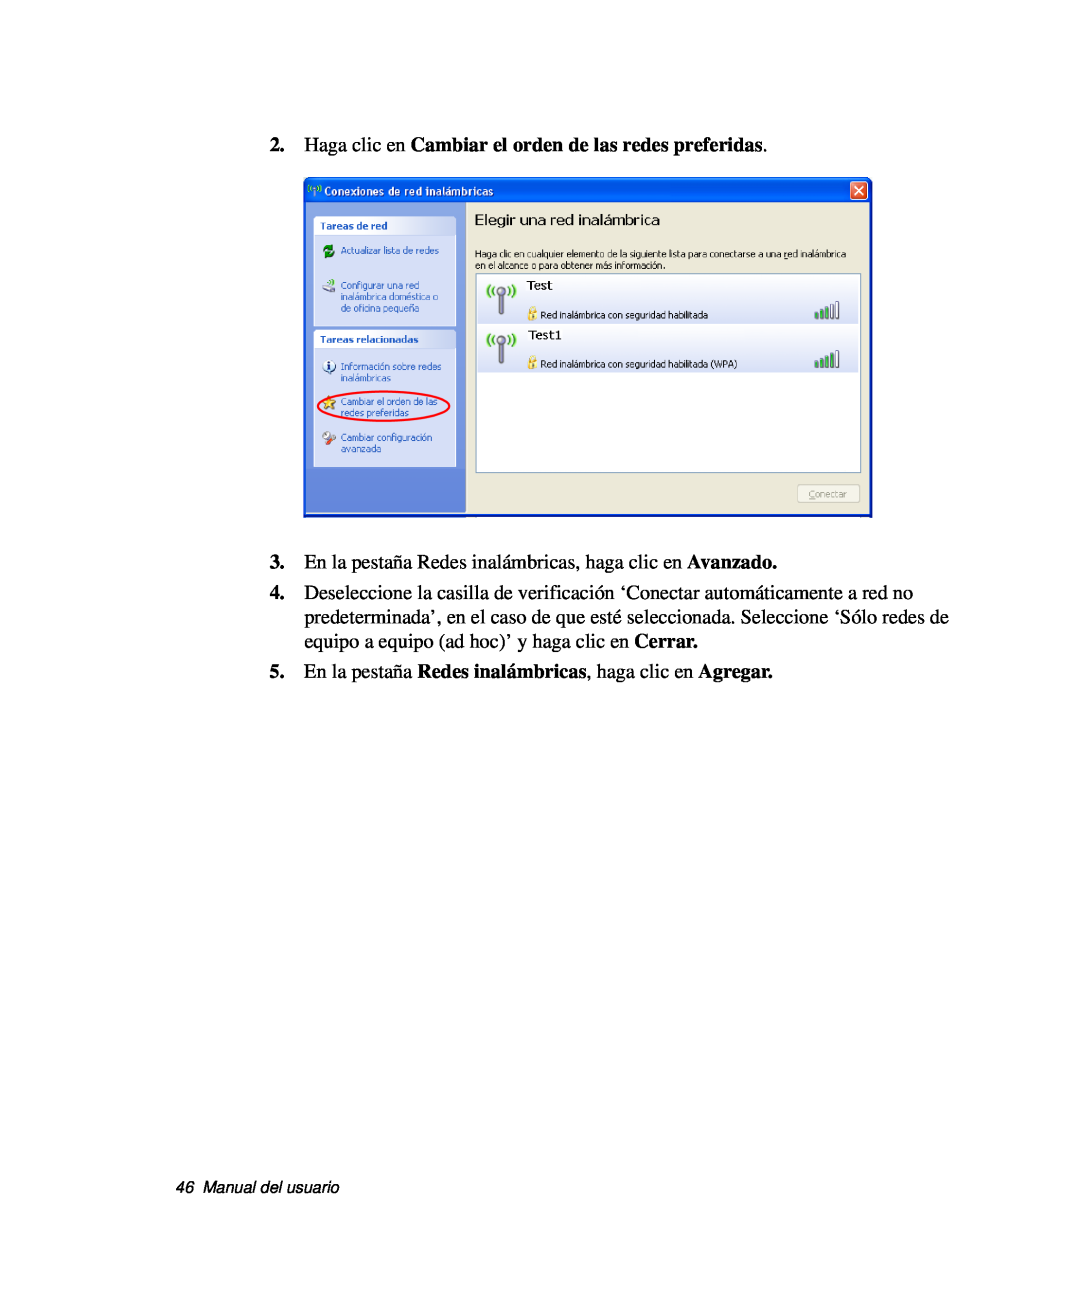 Samsung NP-Q30T002/SES, NP-Q30TY02/SES manual Haga clic en Cambiar el orden de las redes preferidas, Manual del usuario 